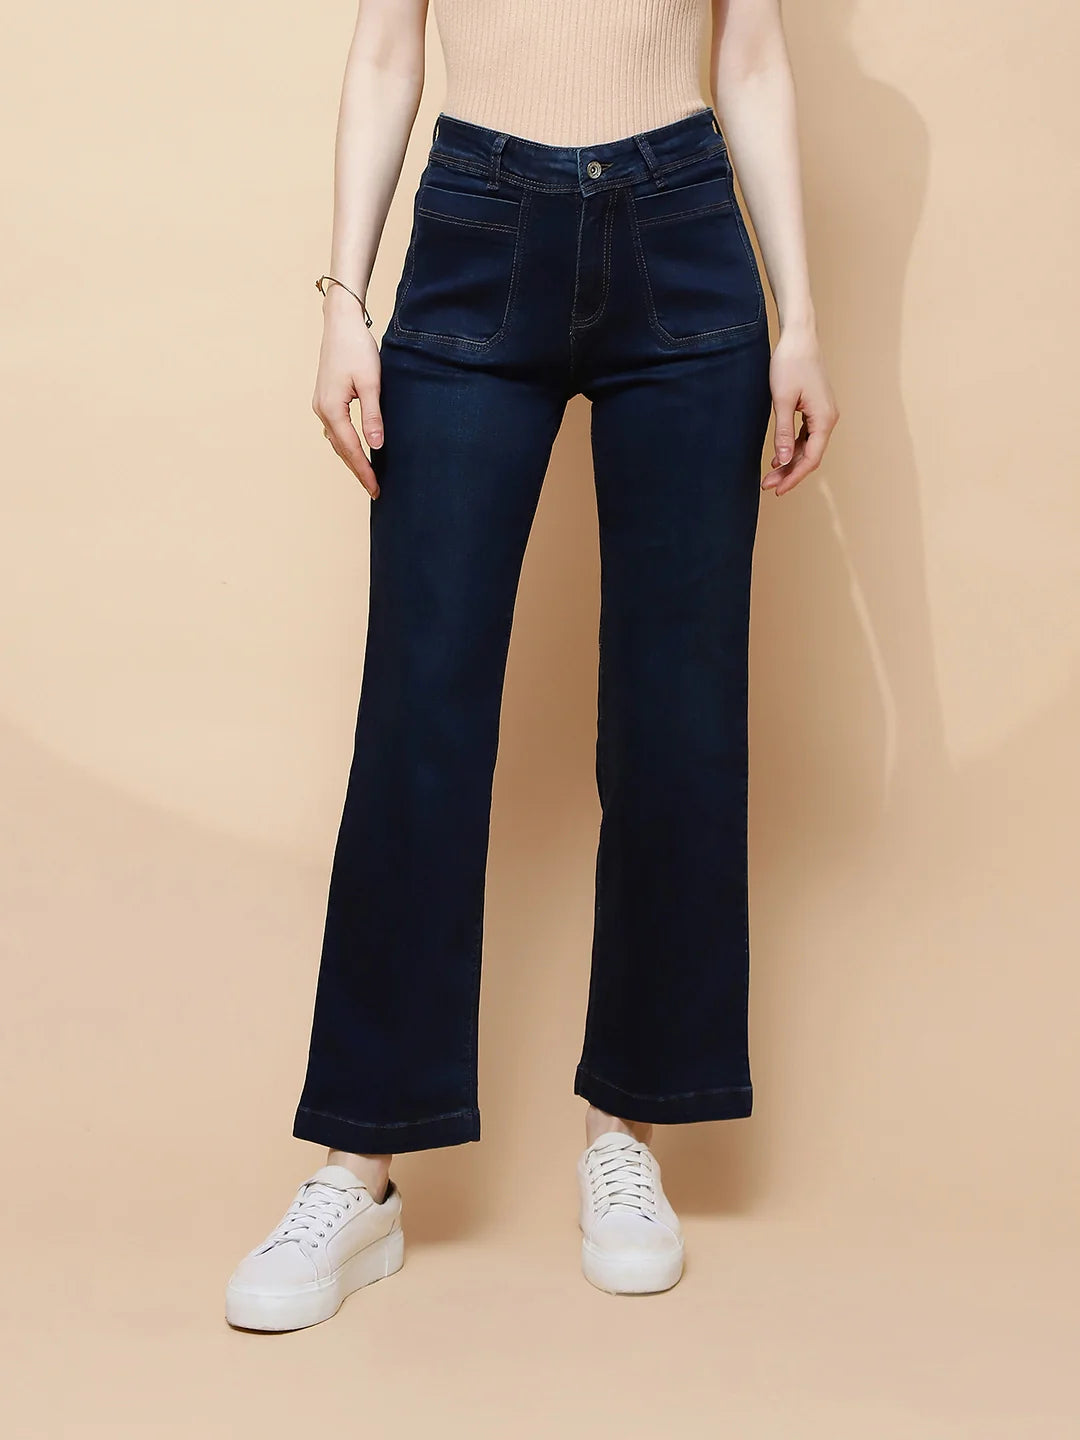 Dark Blue Cotton Blend Straight Slim Fit Jeans For Women